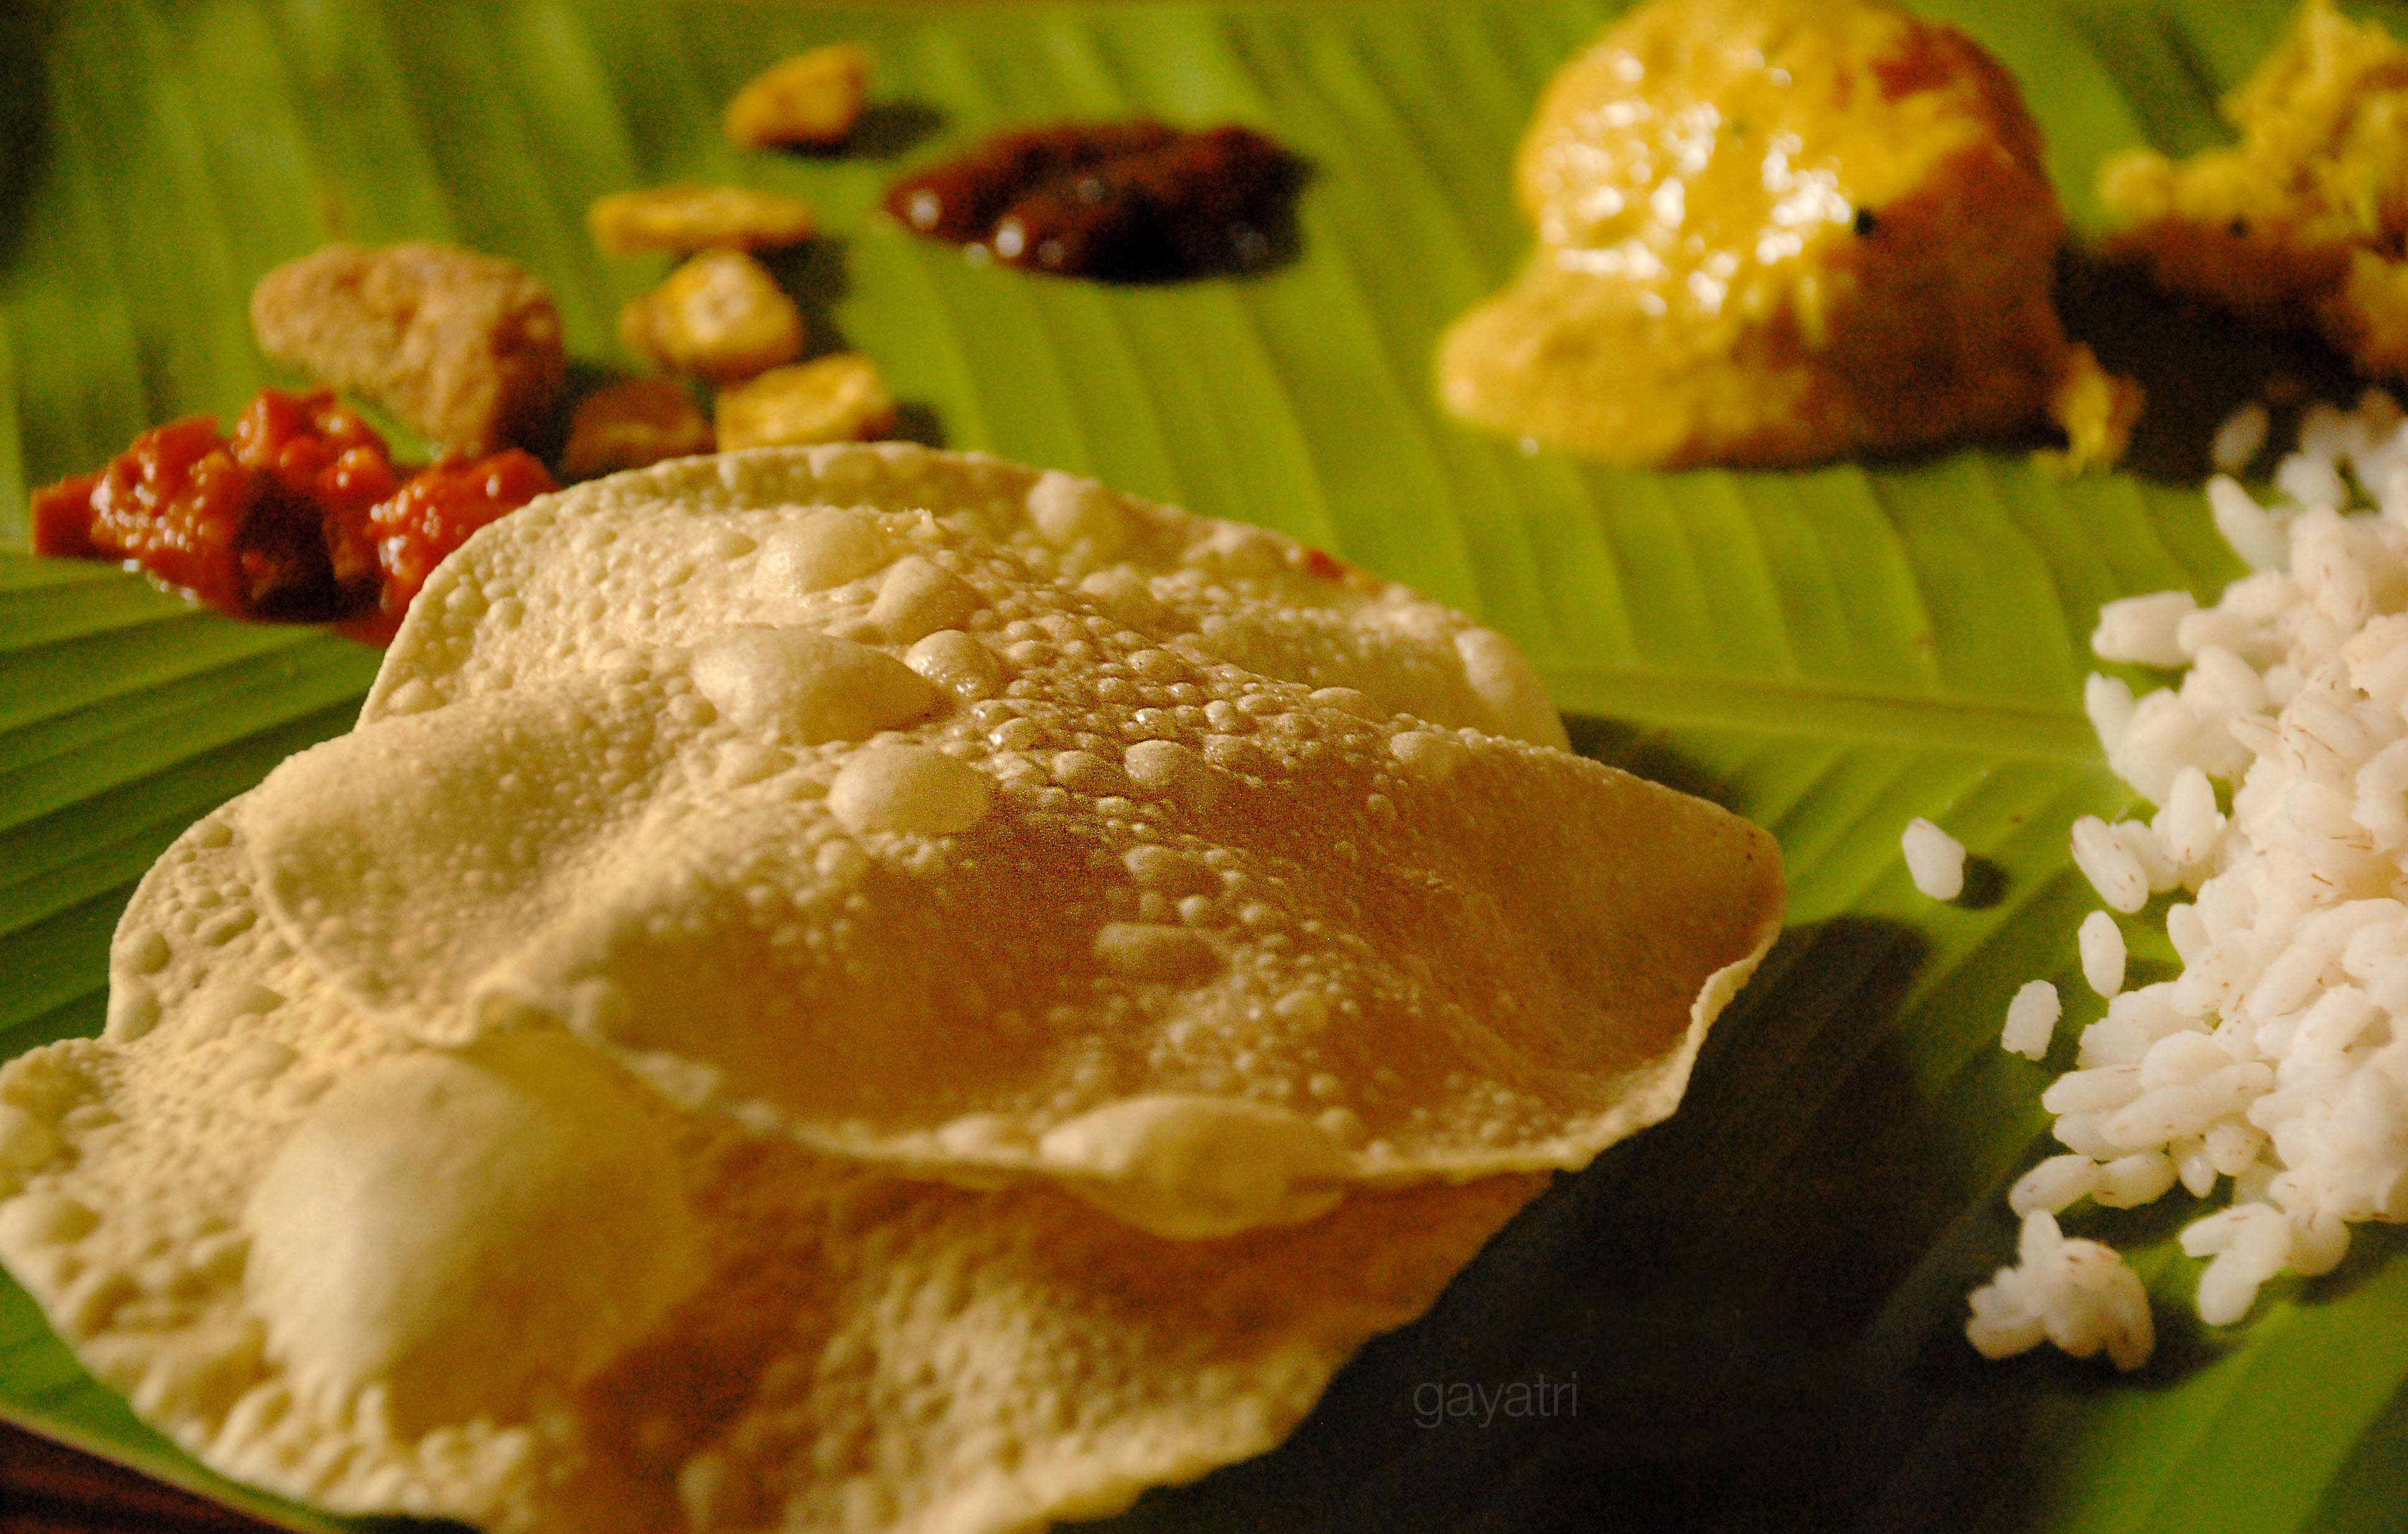 Kerala's mouth watering food